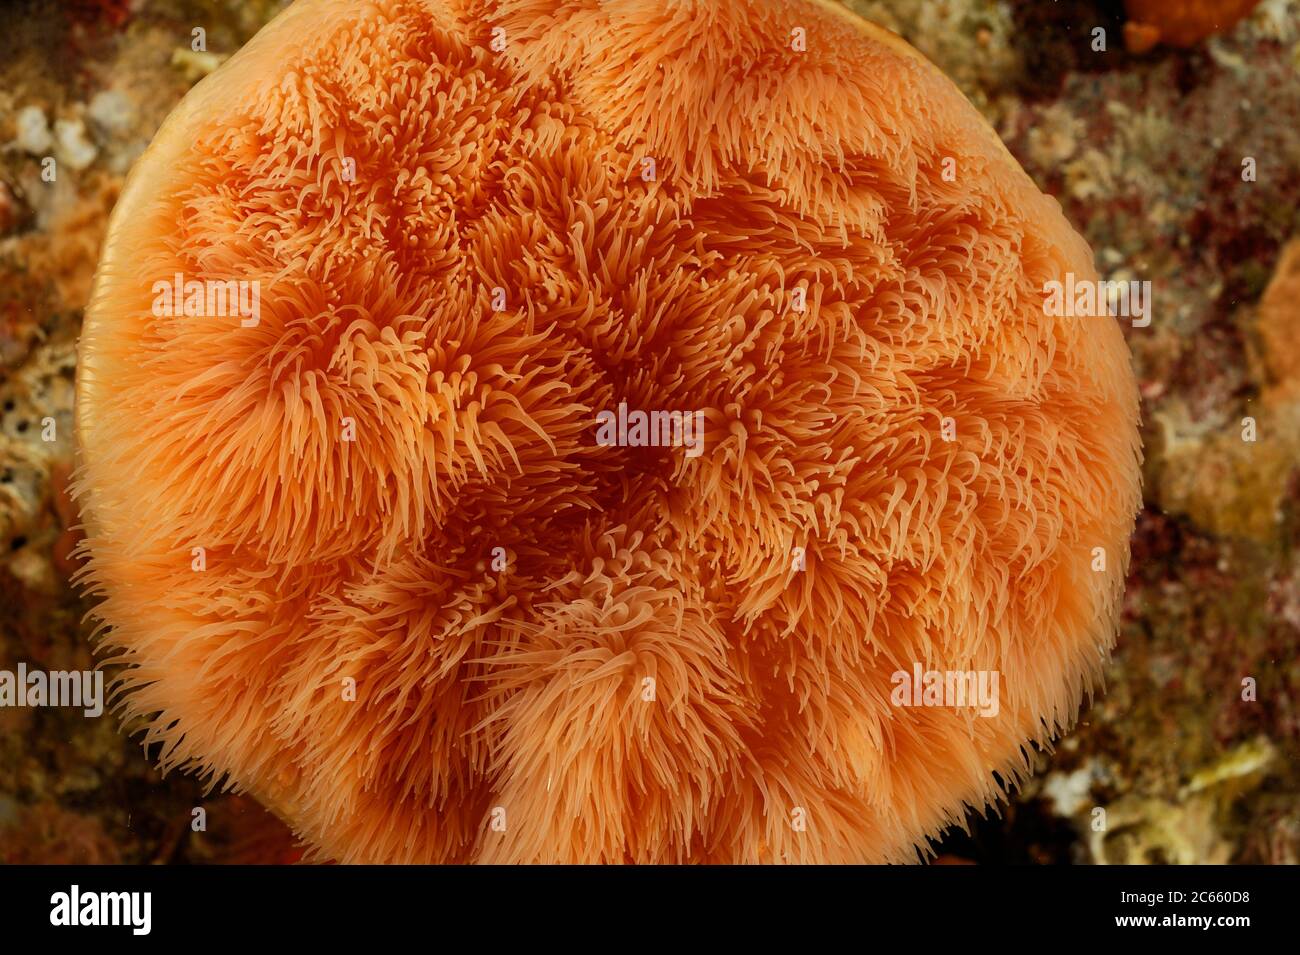 Plumose anemone (Metridium senile), Atlantic Ocean, Strømsholmen, North West Norway Stock Photo